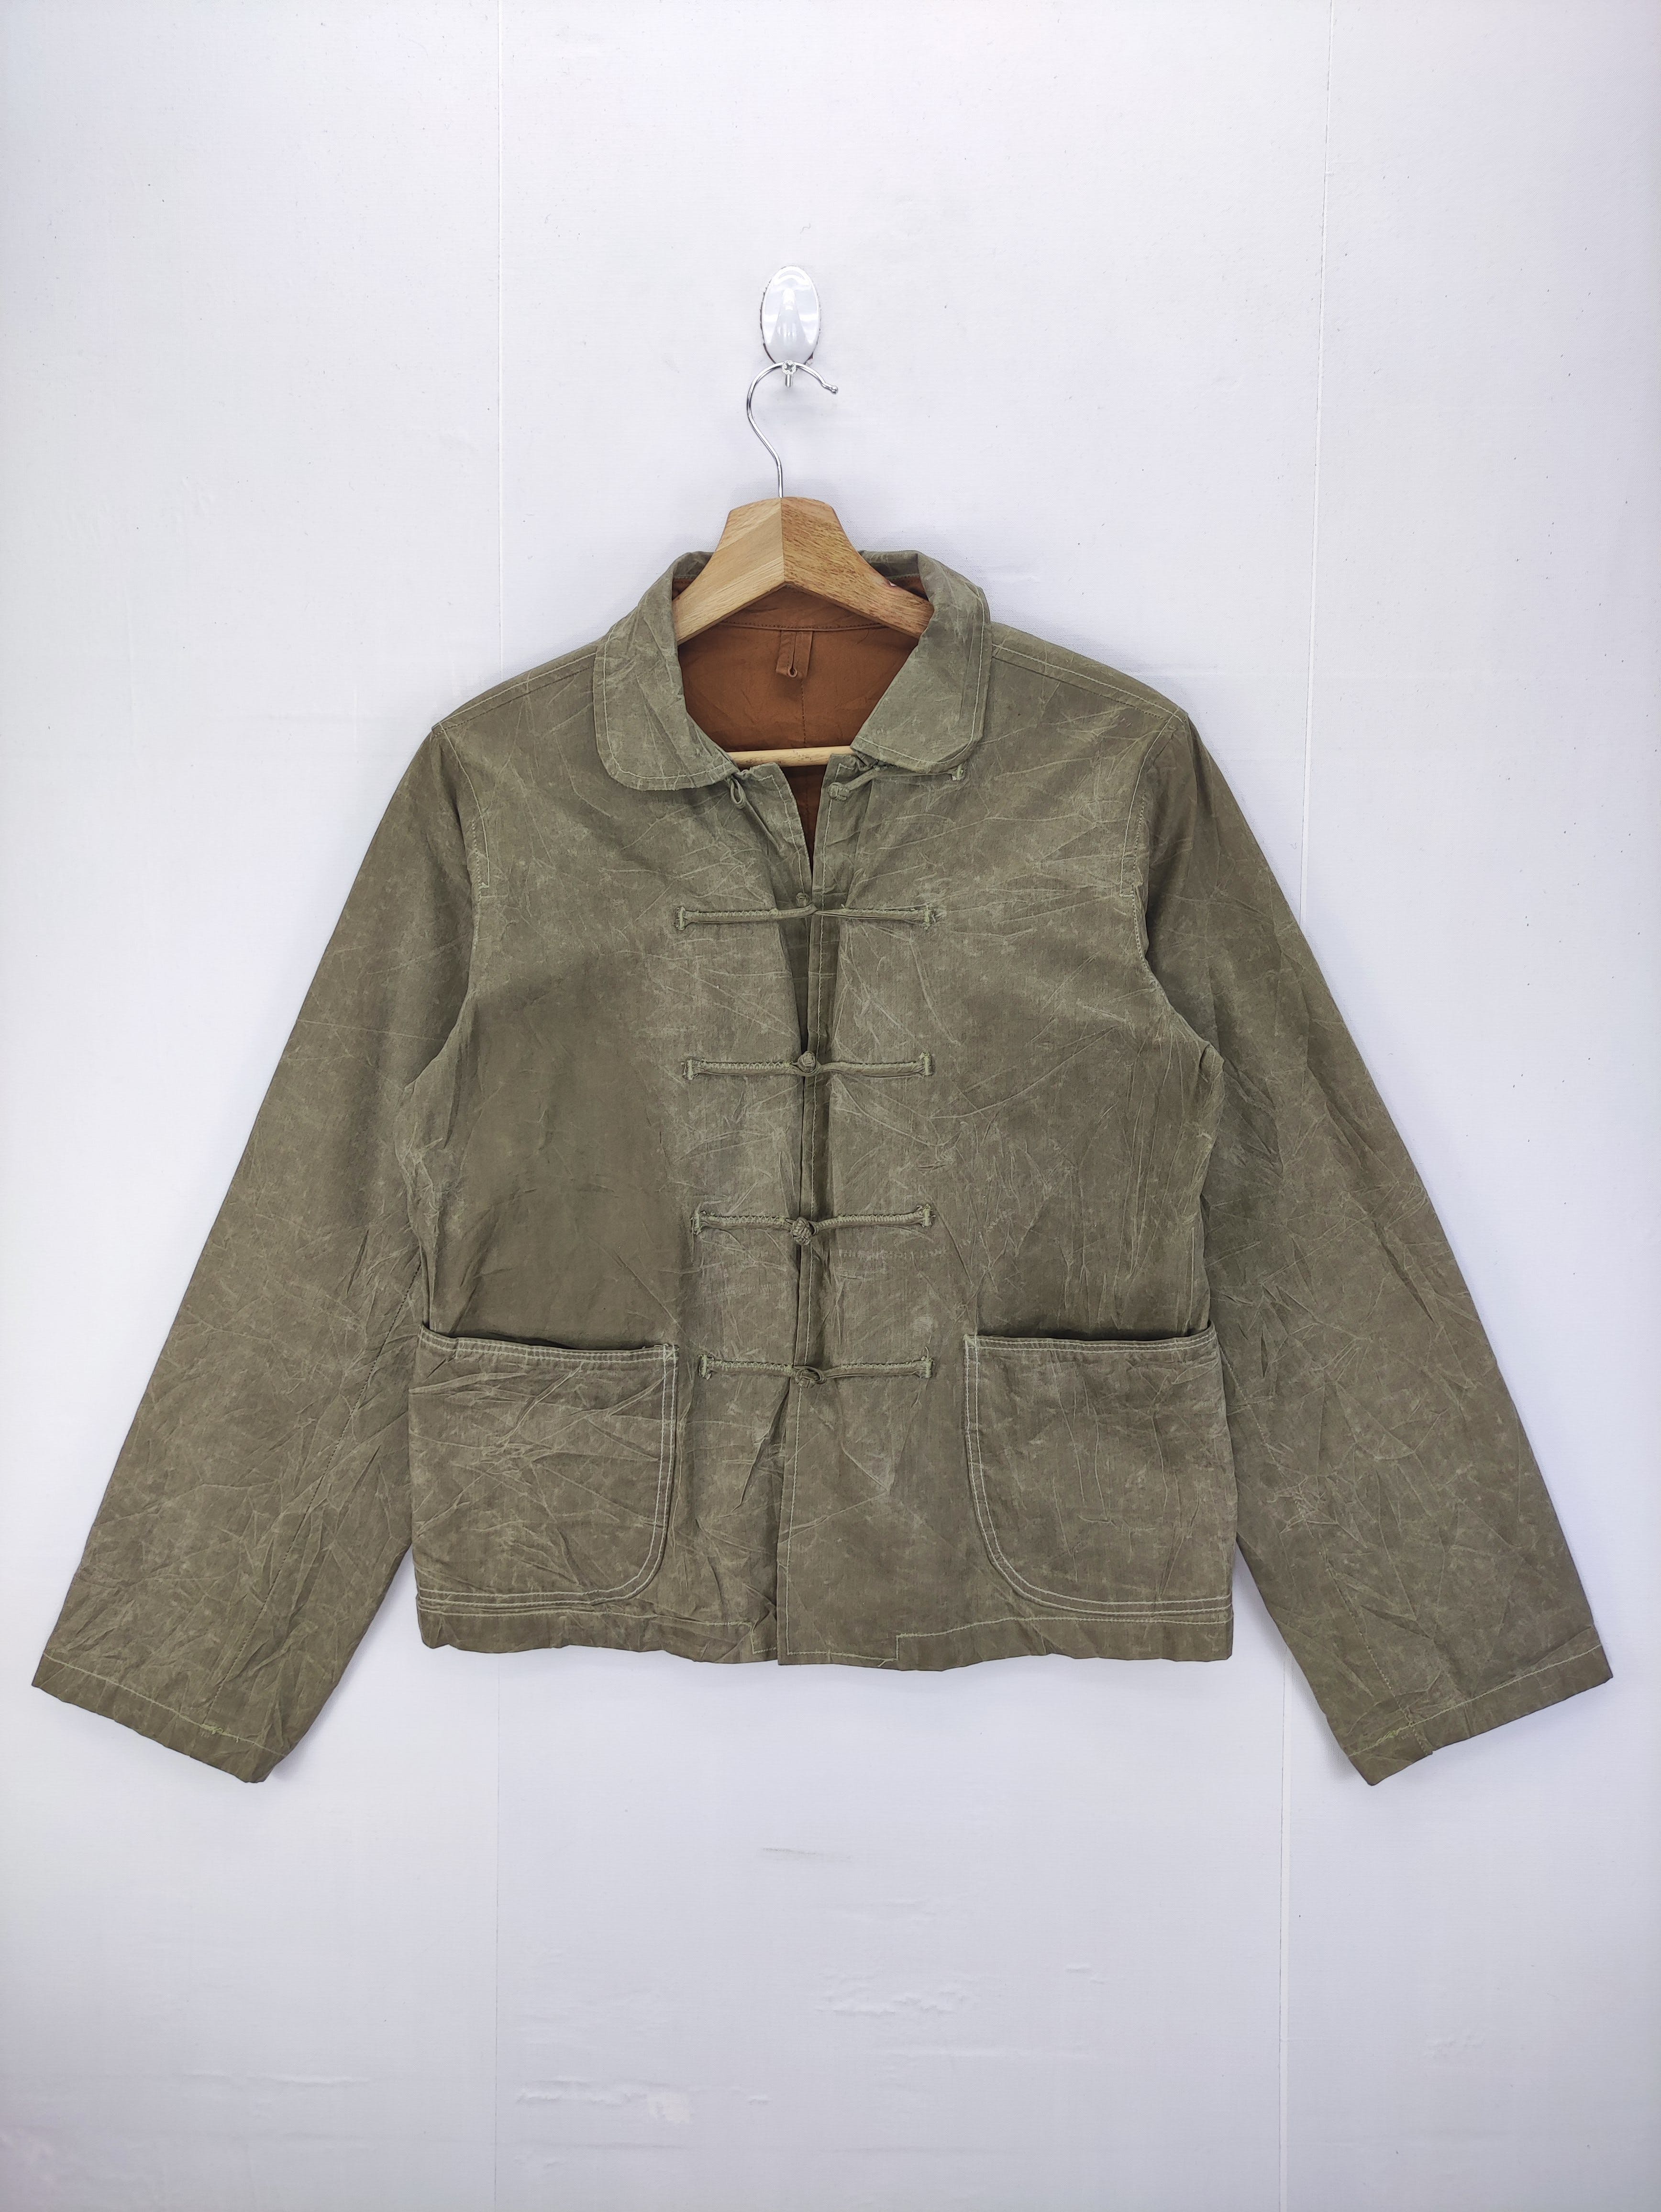 Vintage Kapital kiro Hirata Wax Jacket - 1